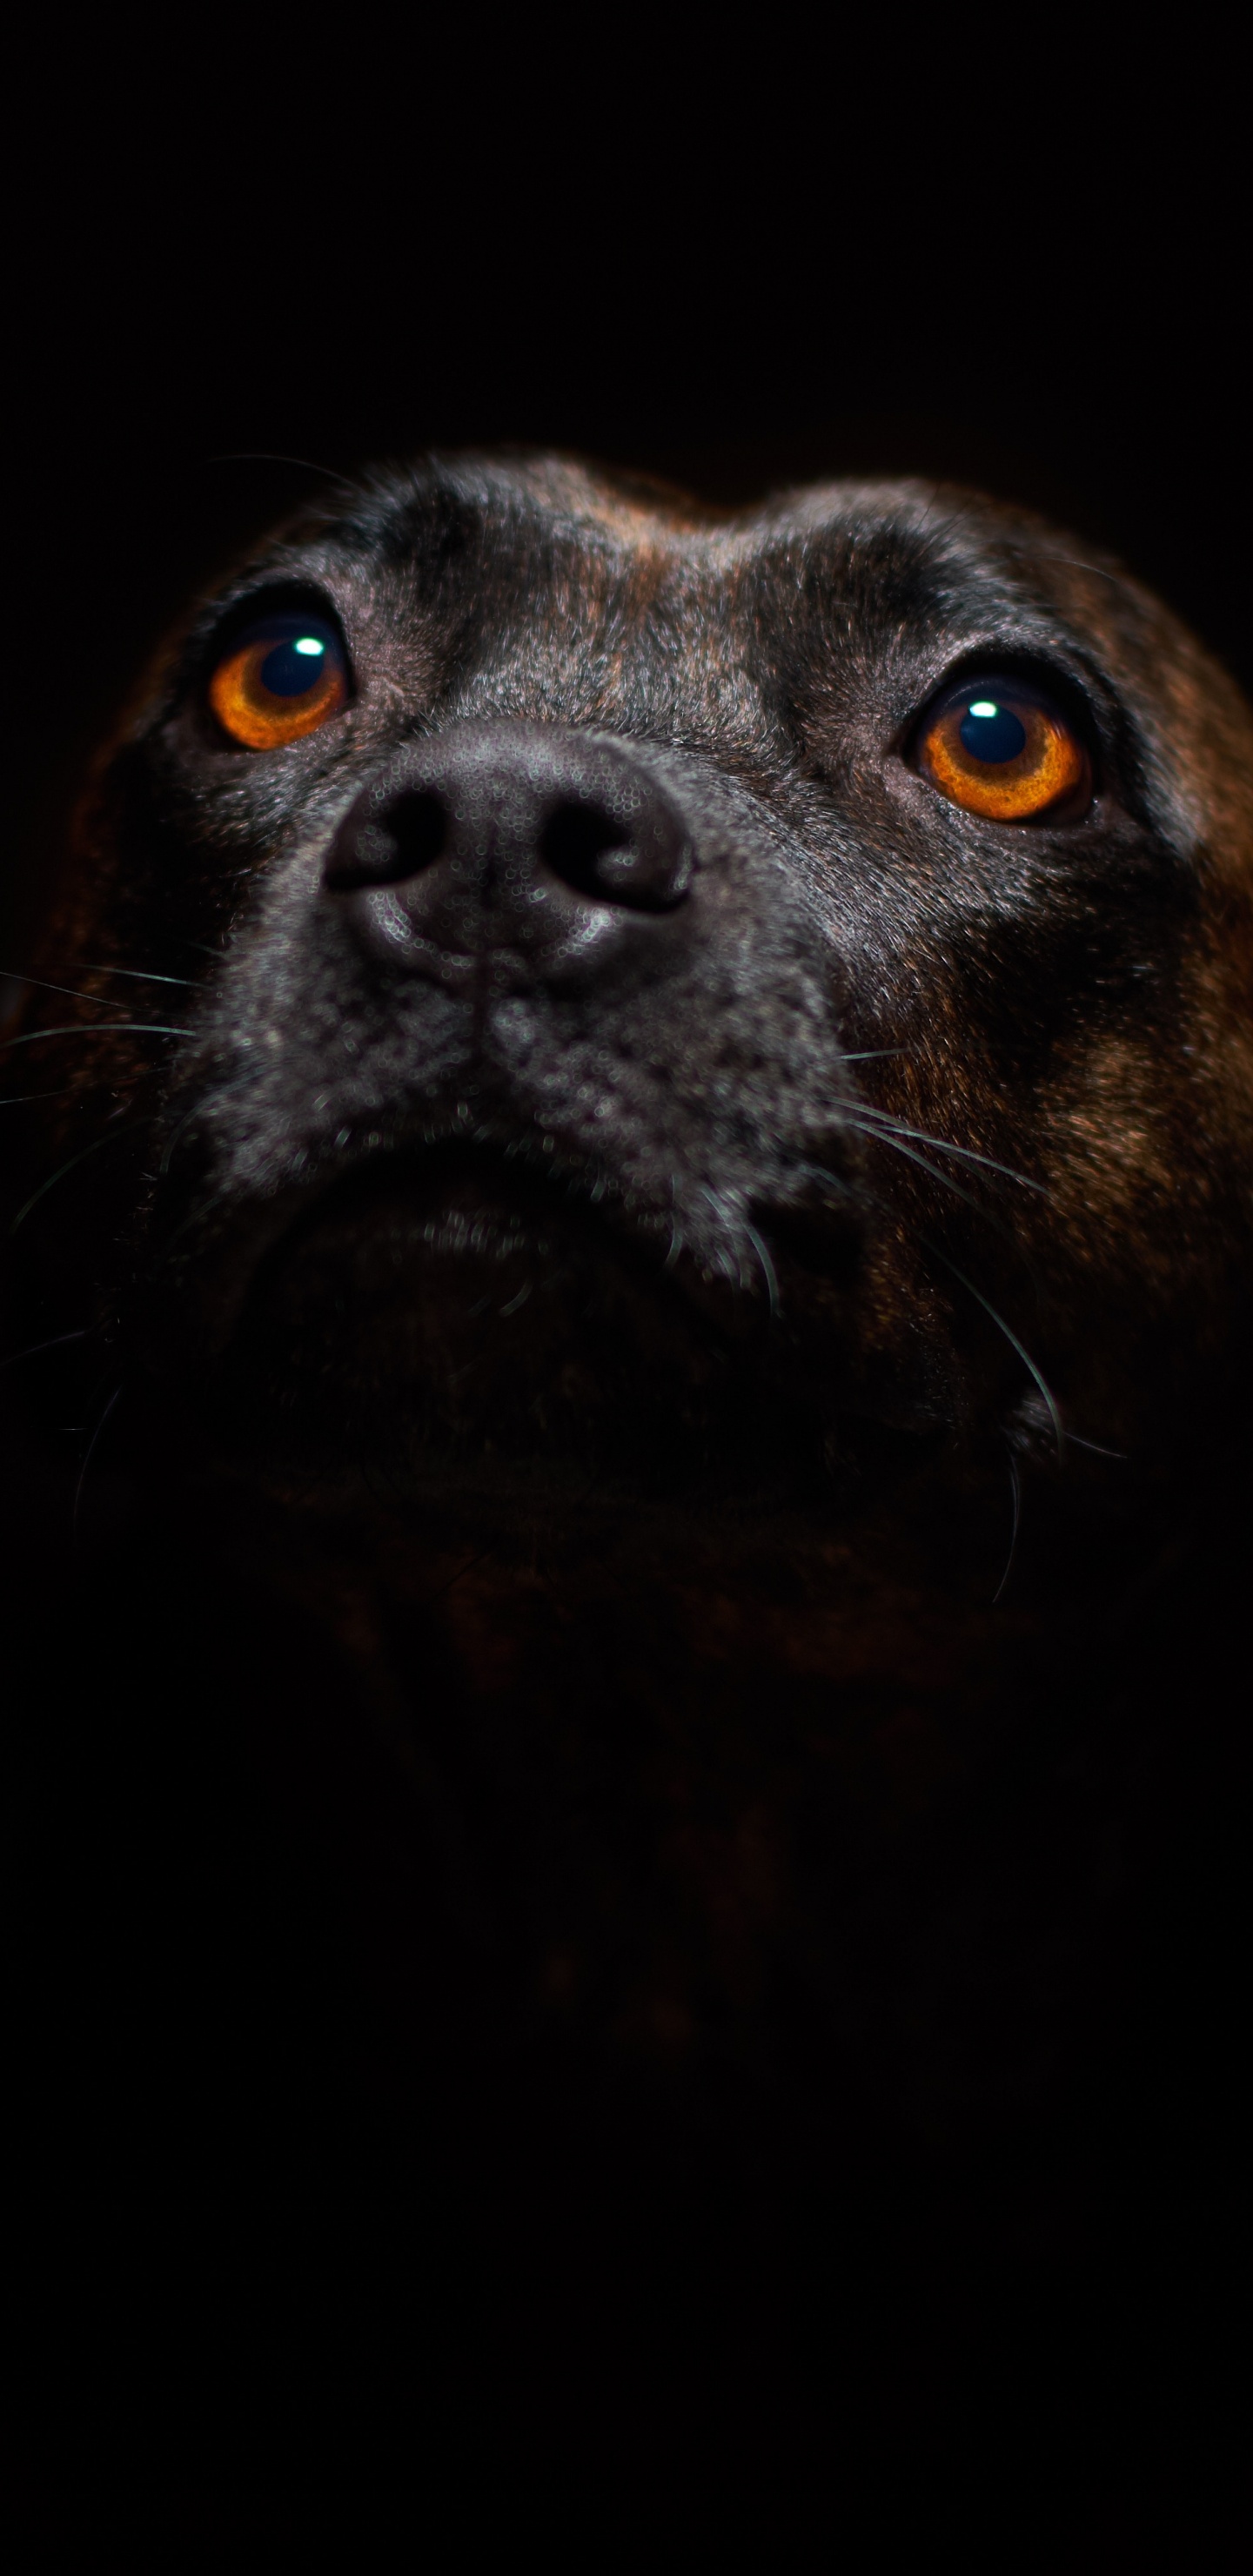 Black Short Coated Medium Sized Dog. Wallpaper in 1440x2960 Resolution